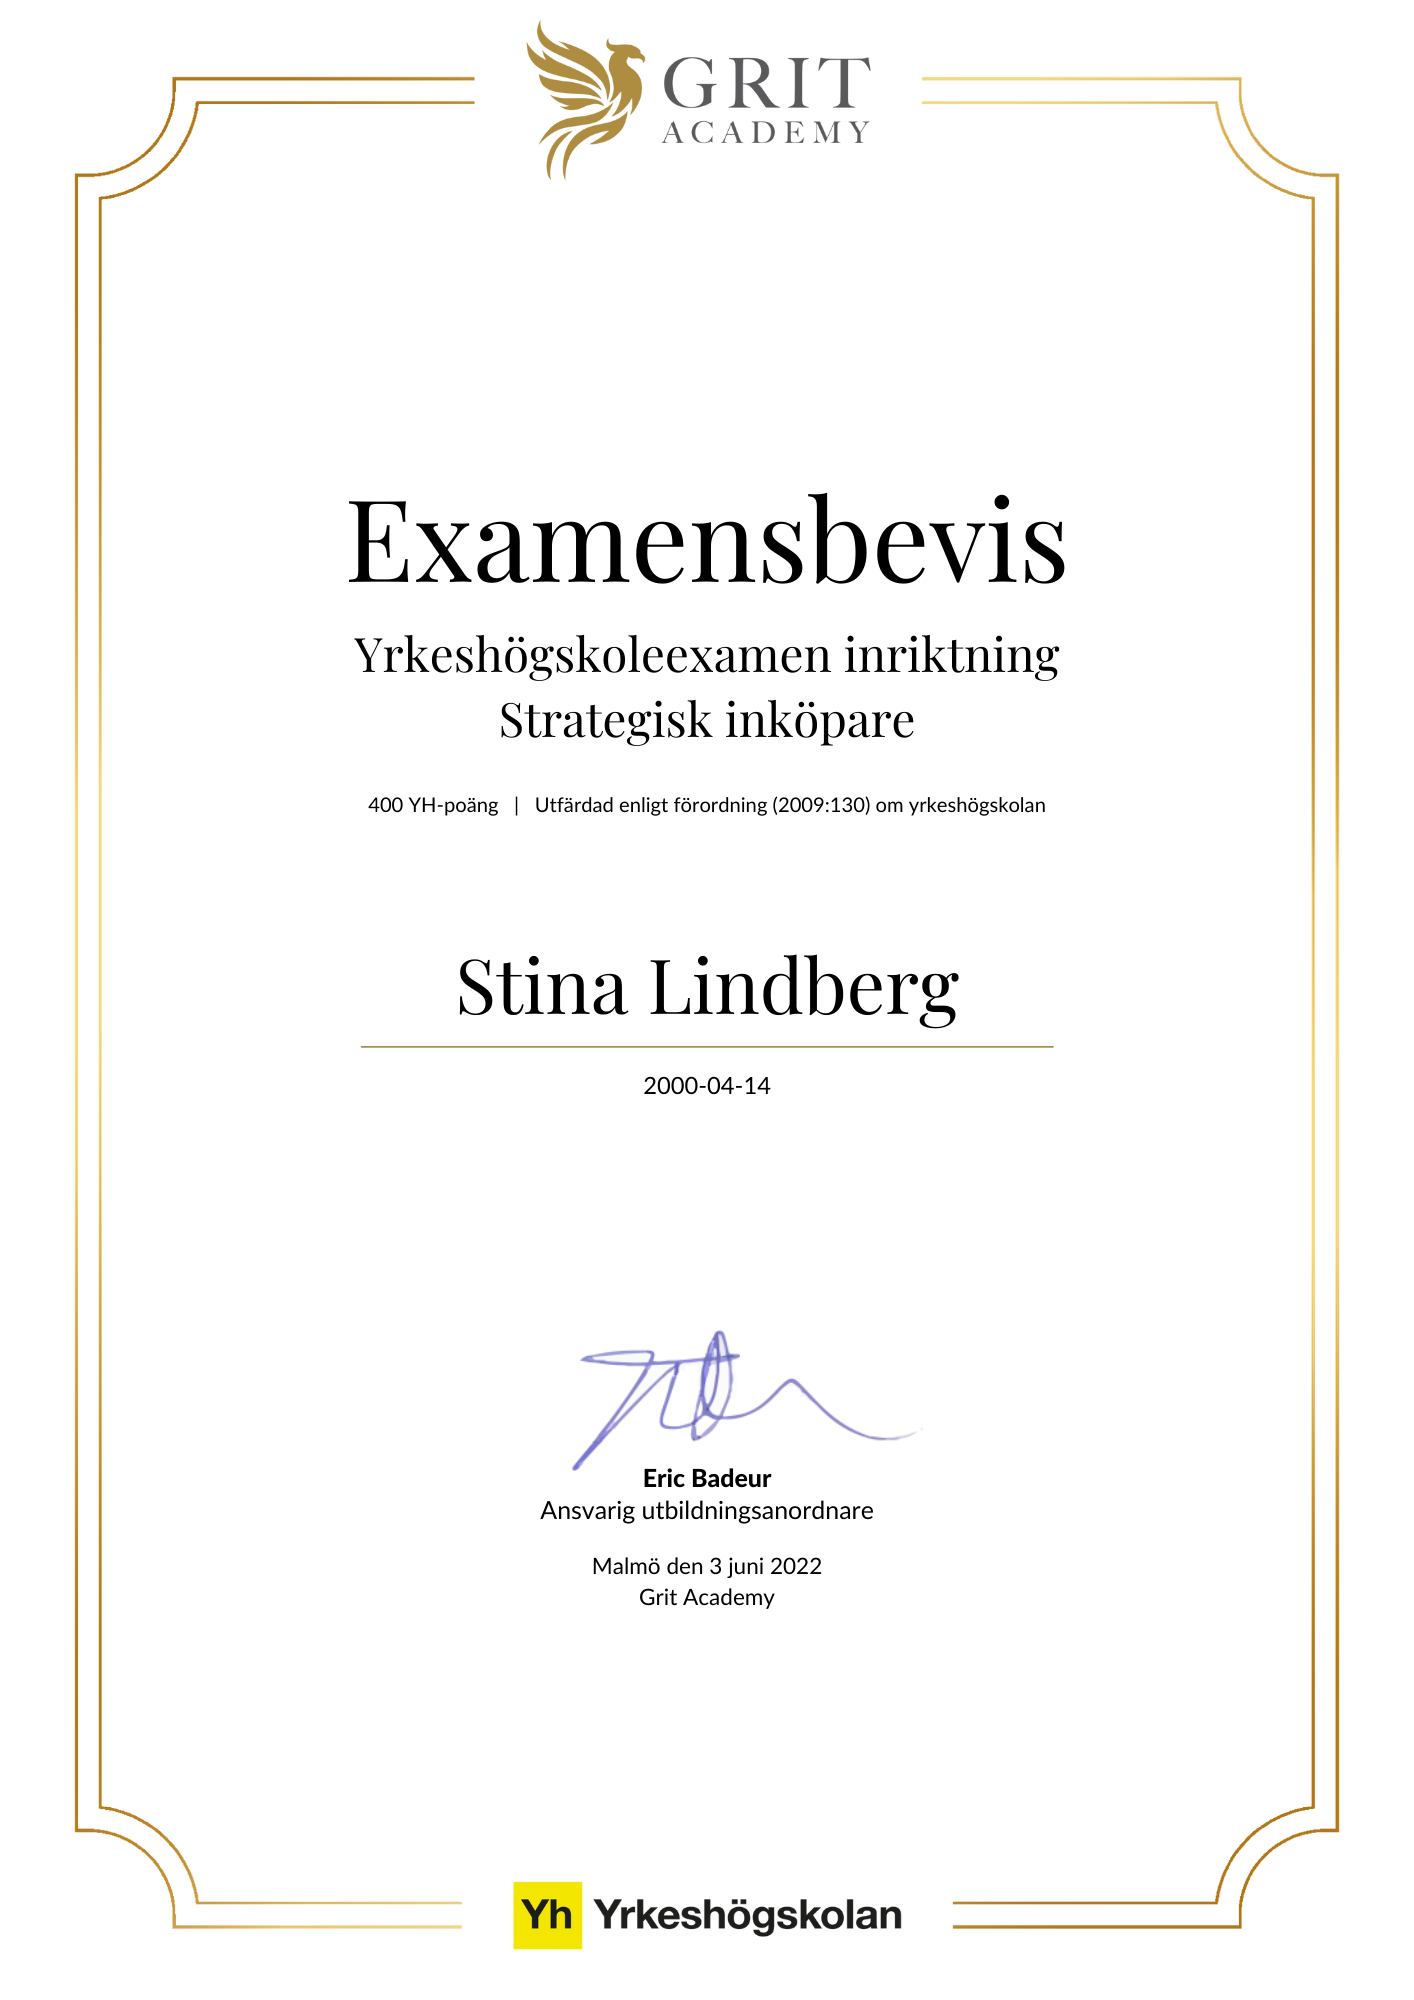 Examensbevis Stina Lindberg - 1